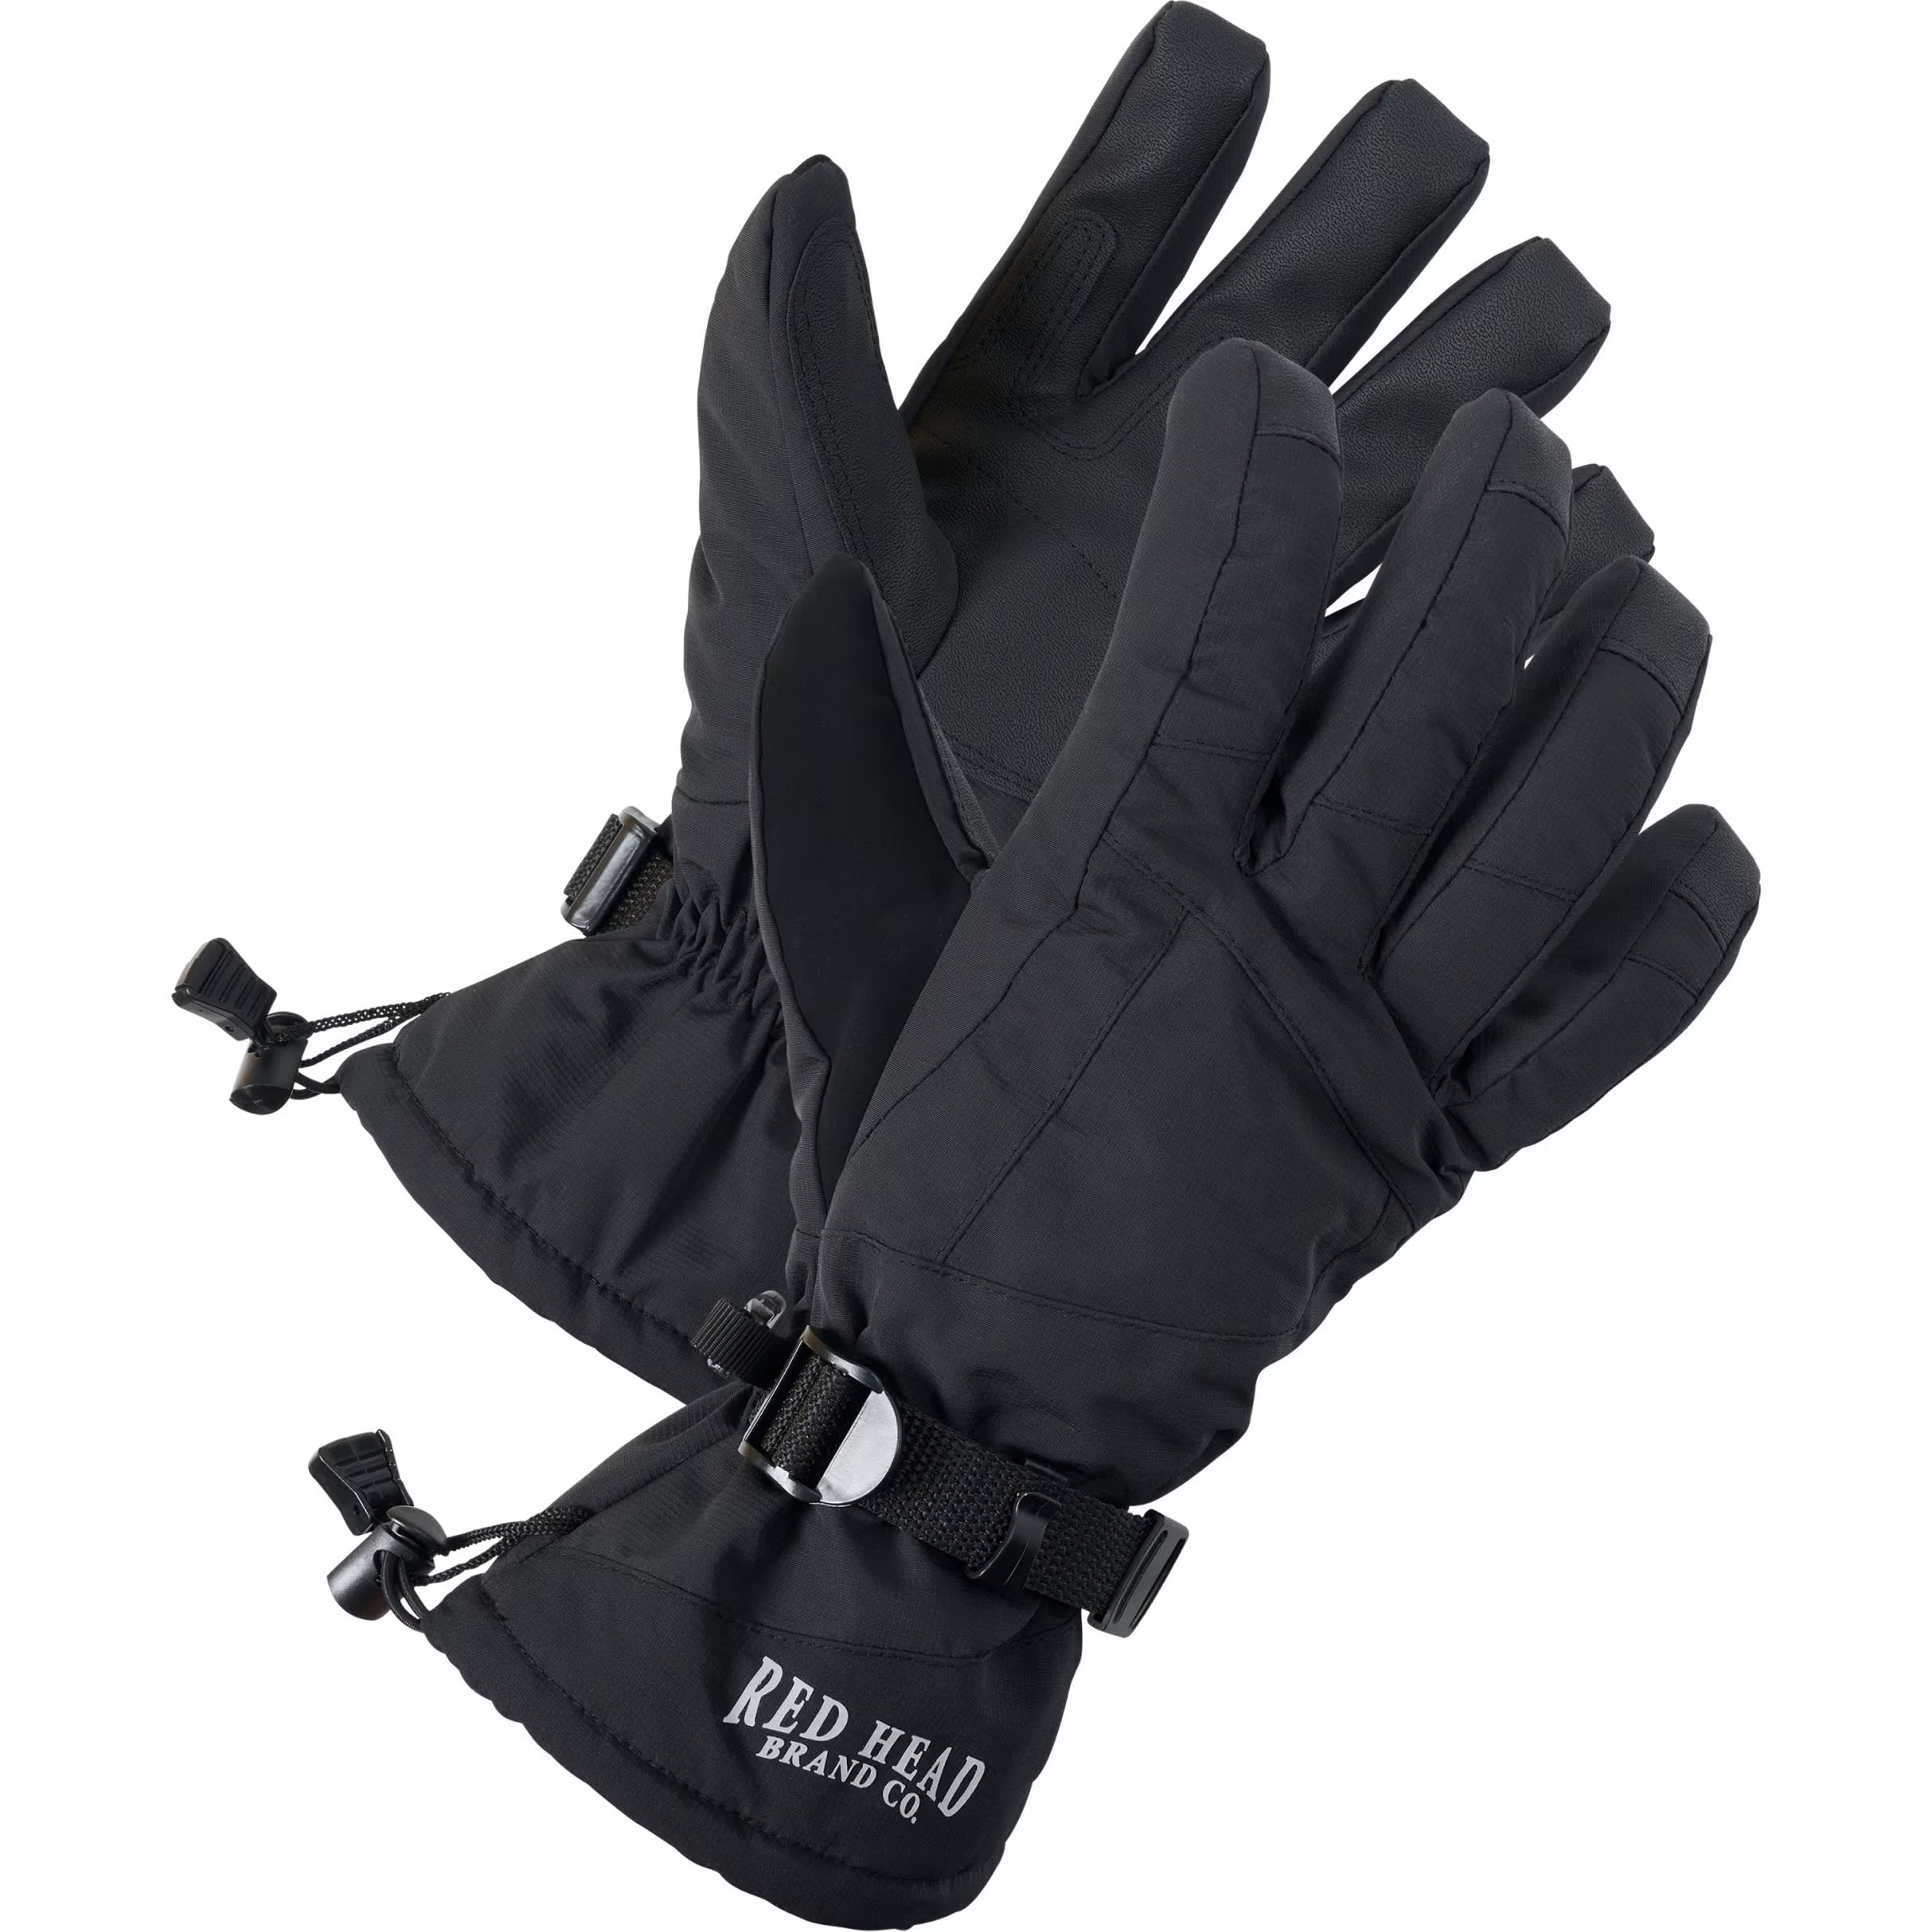 RedHead® Men’s Winter Gloves